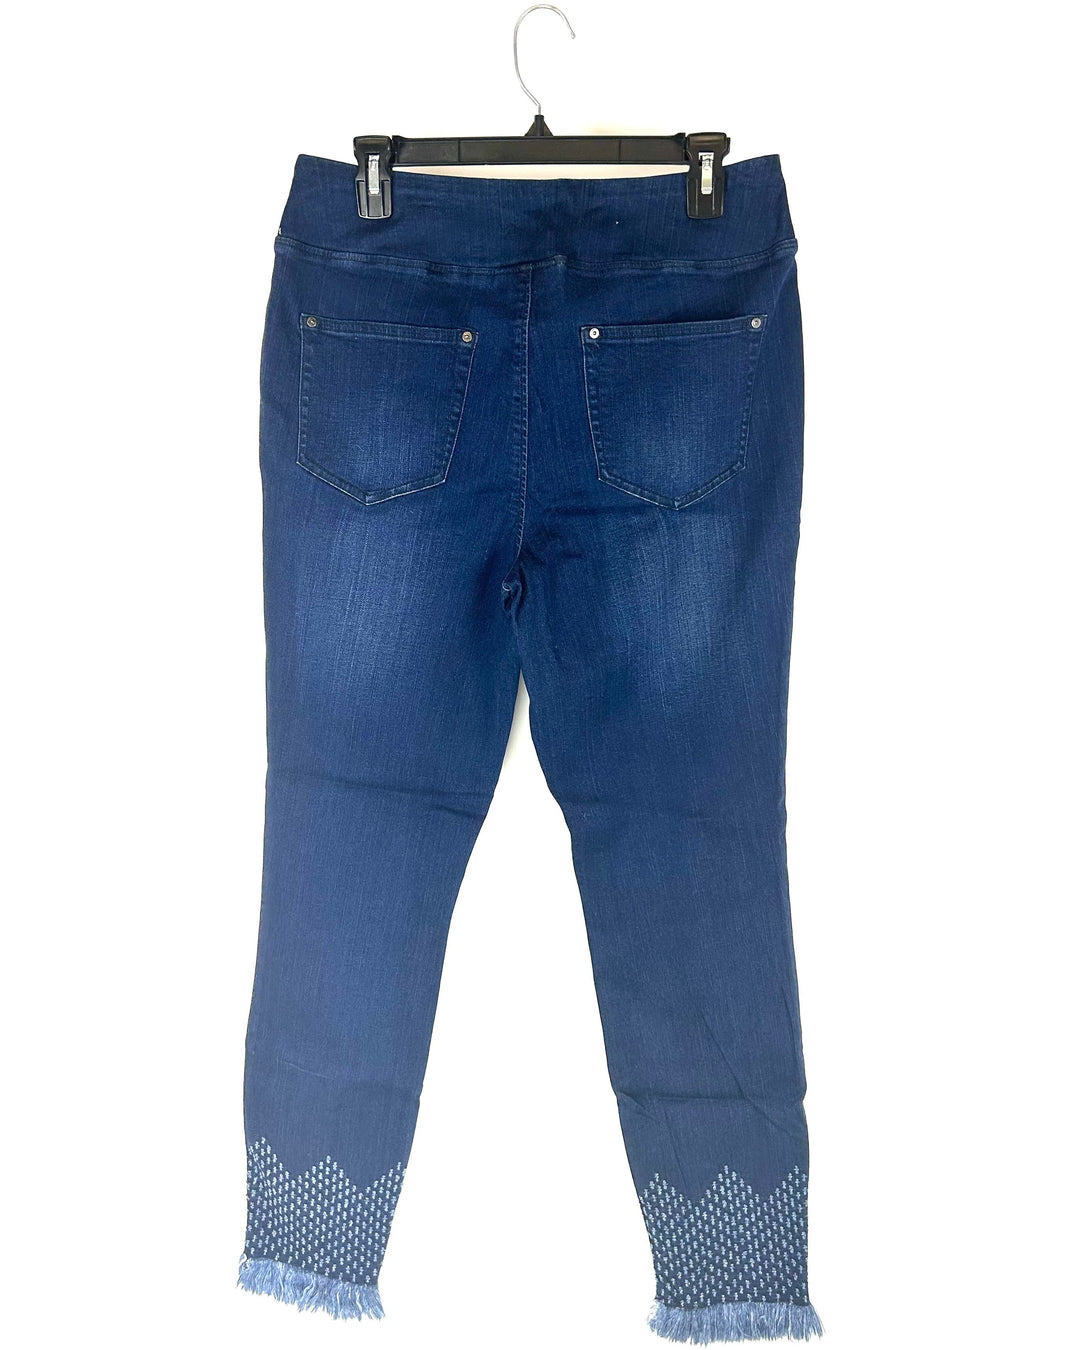 Fringe Jeans - Size 12